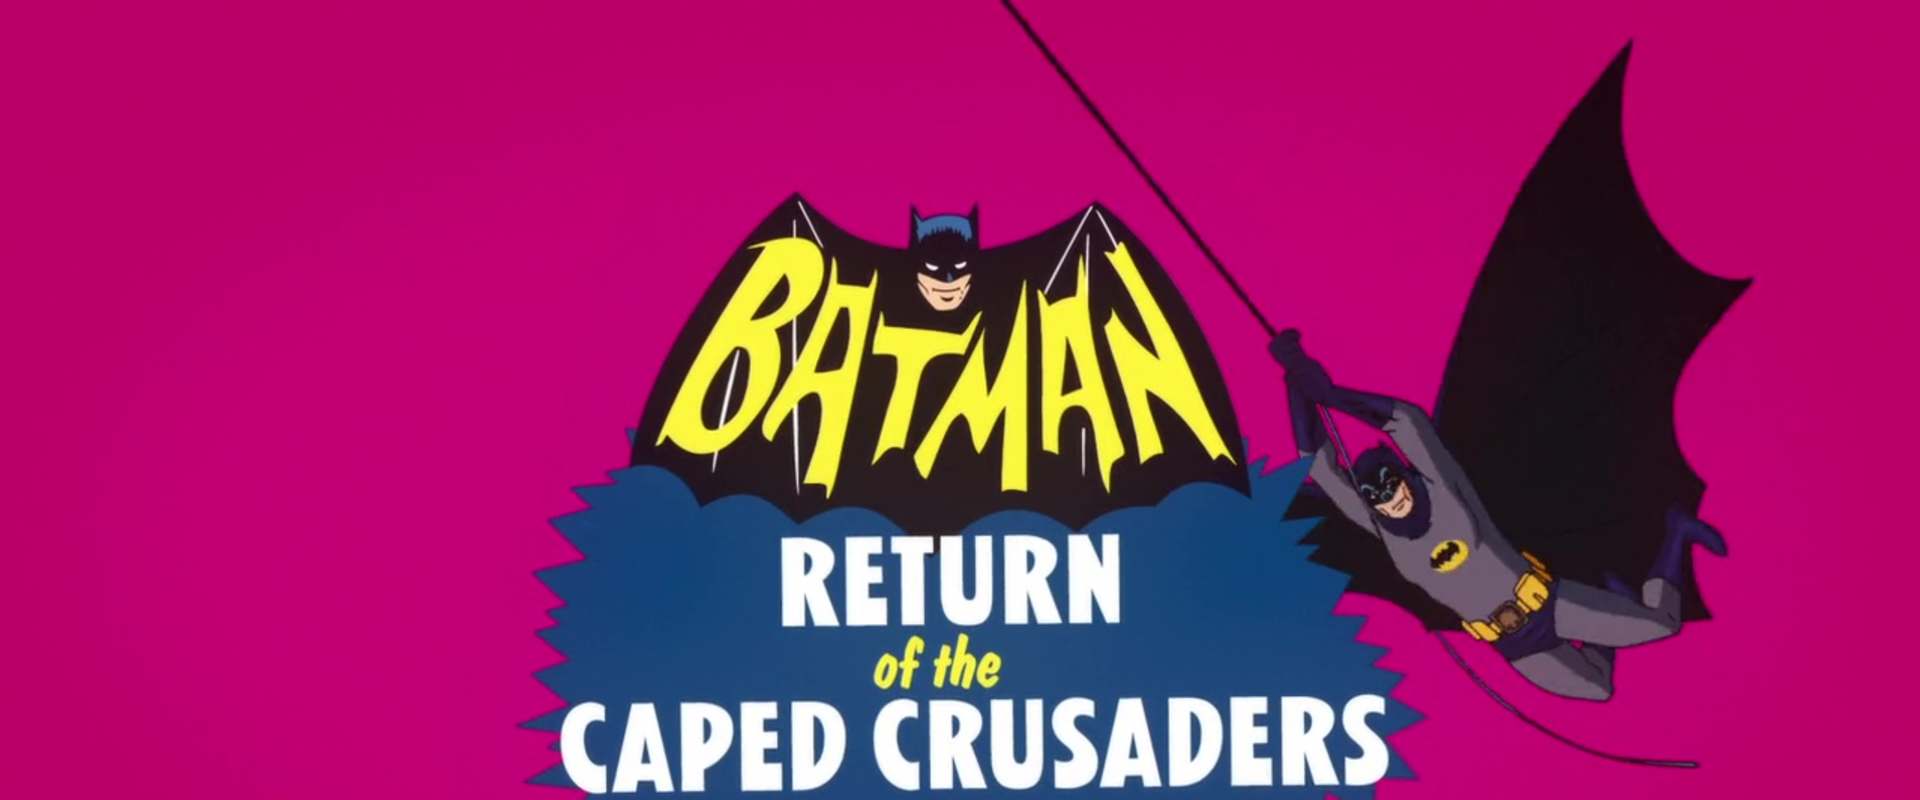 Batman: Return of the Caped Crusaders background 2